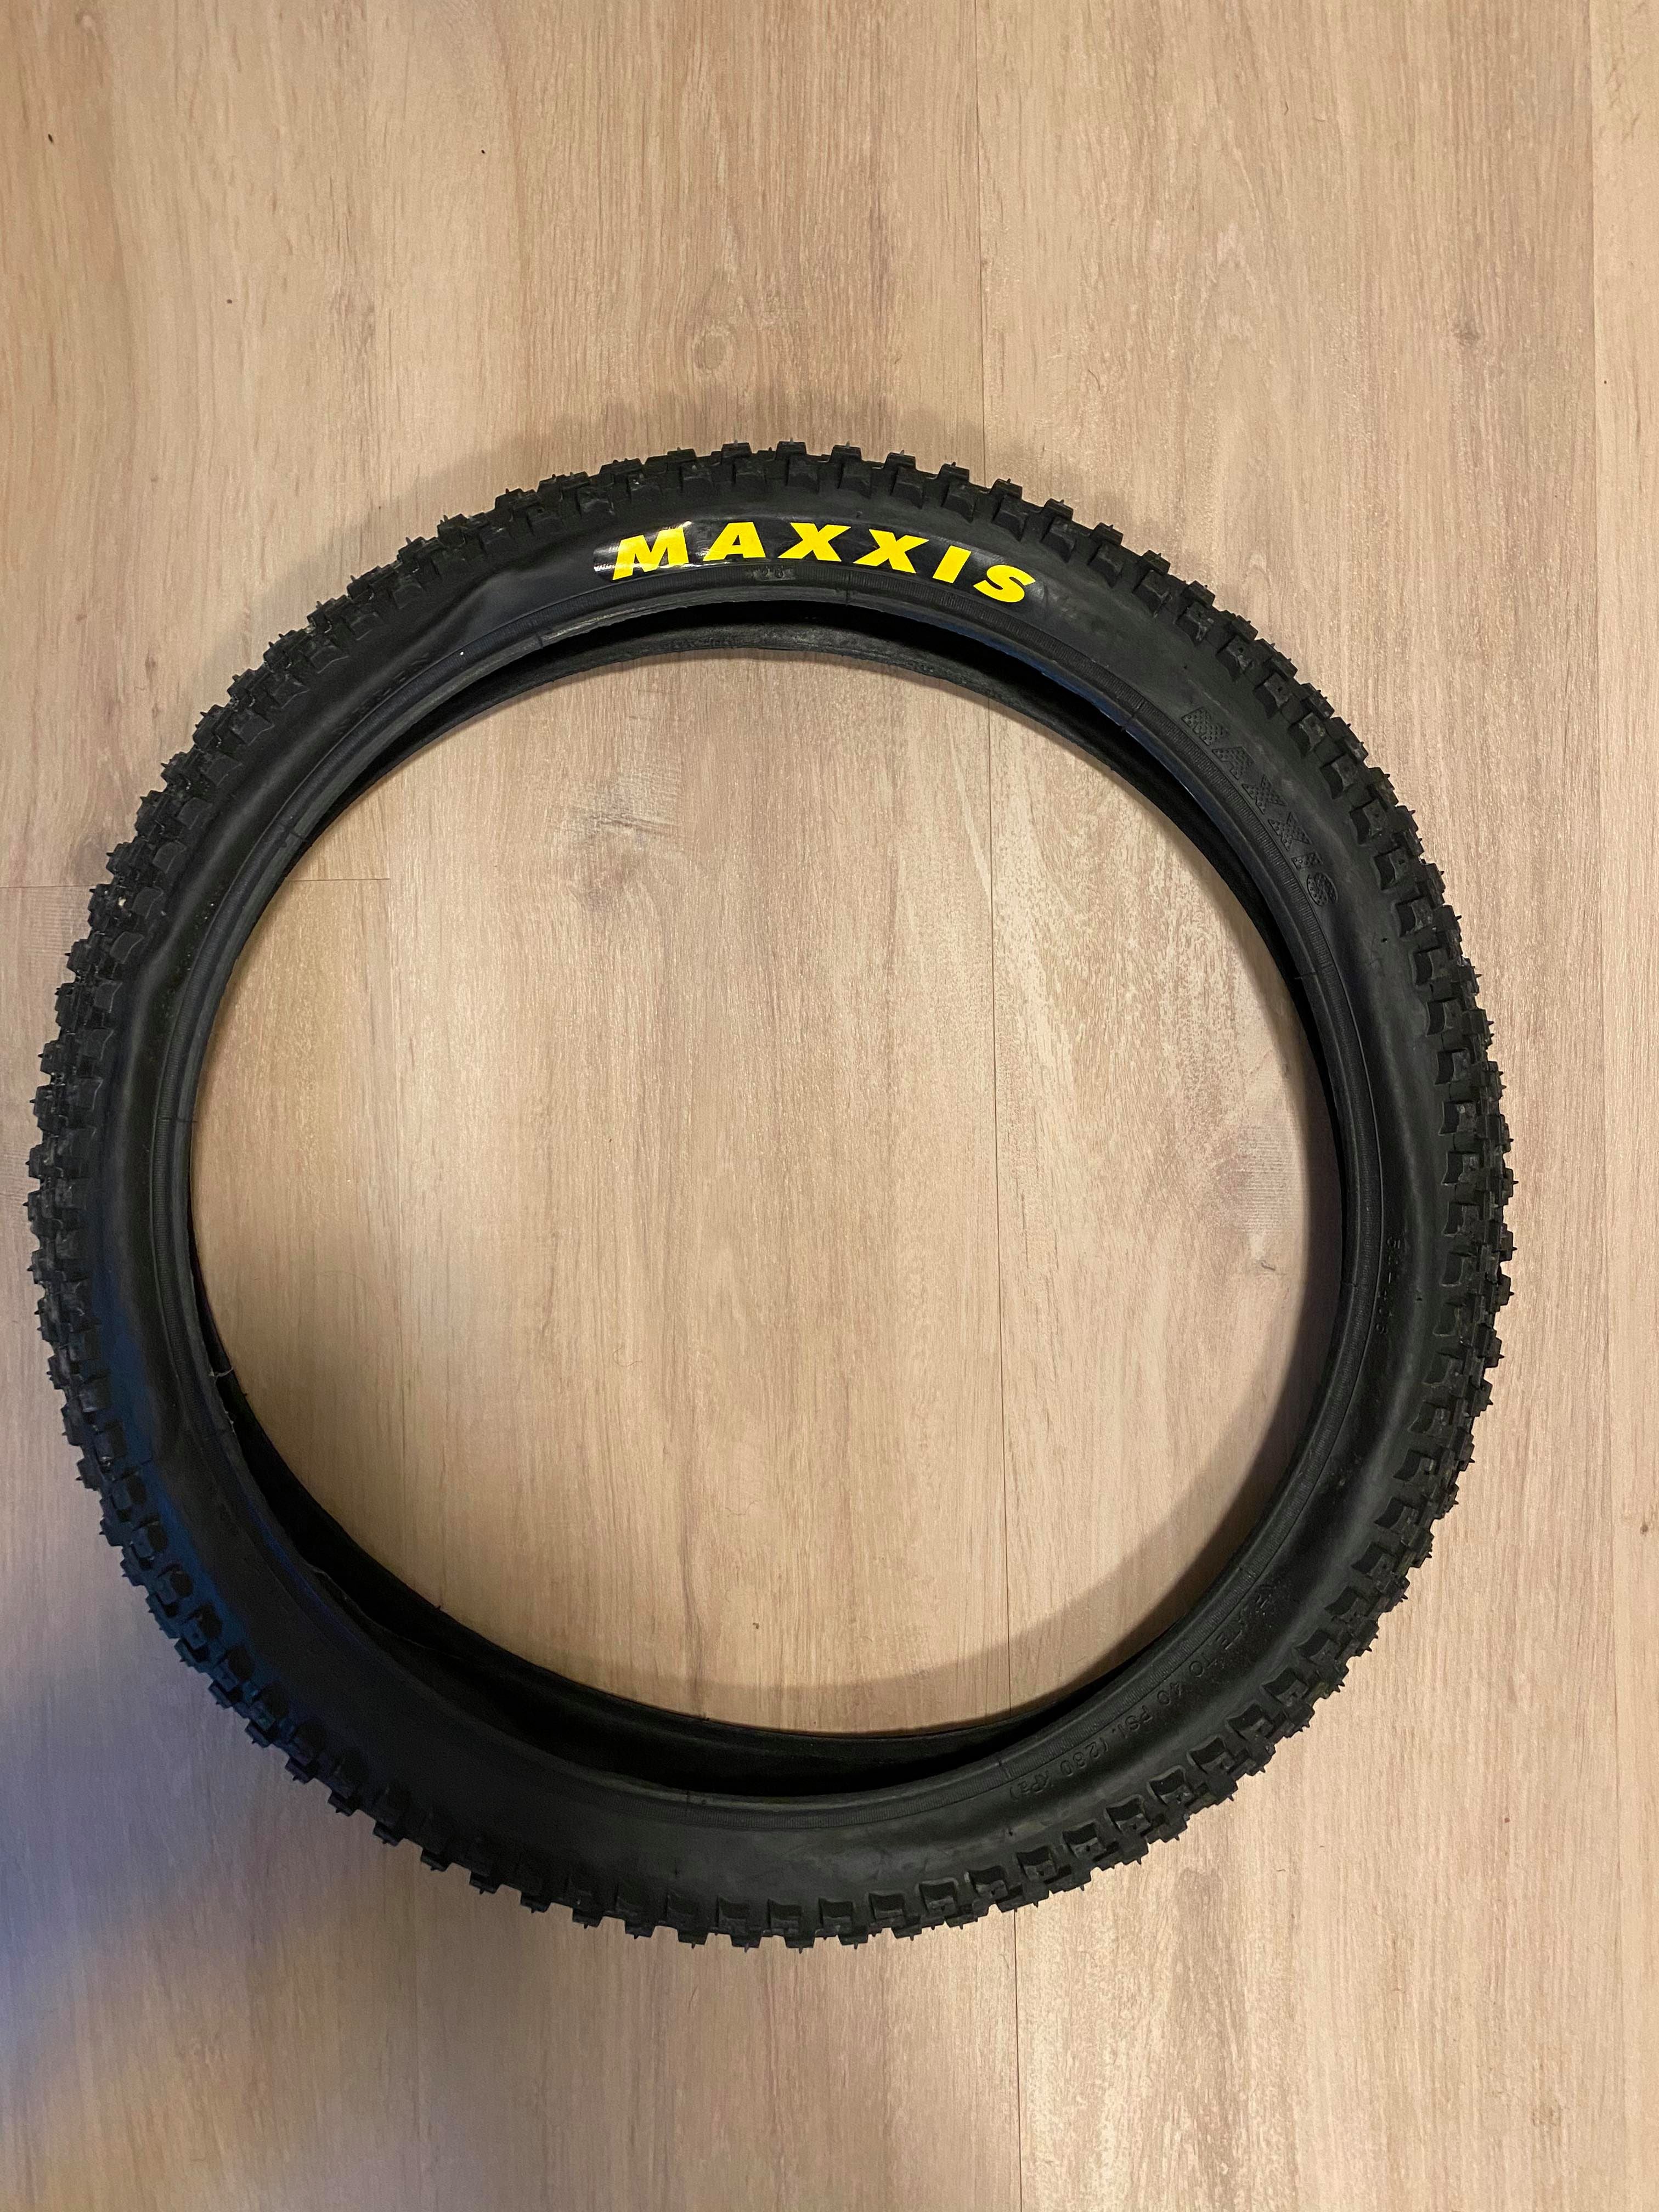 Maxxis Maxx Daddy 20 X 2.0 wire bead tire